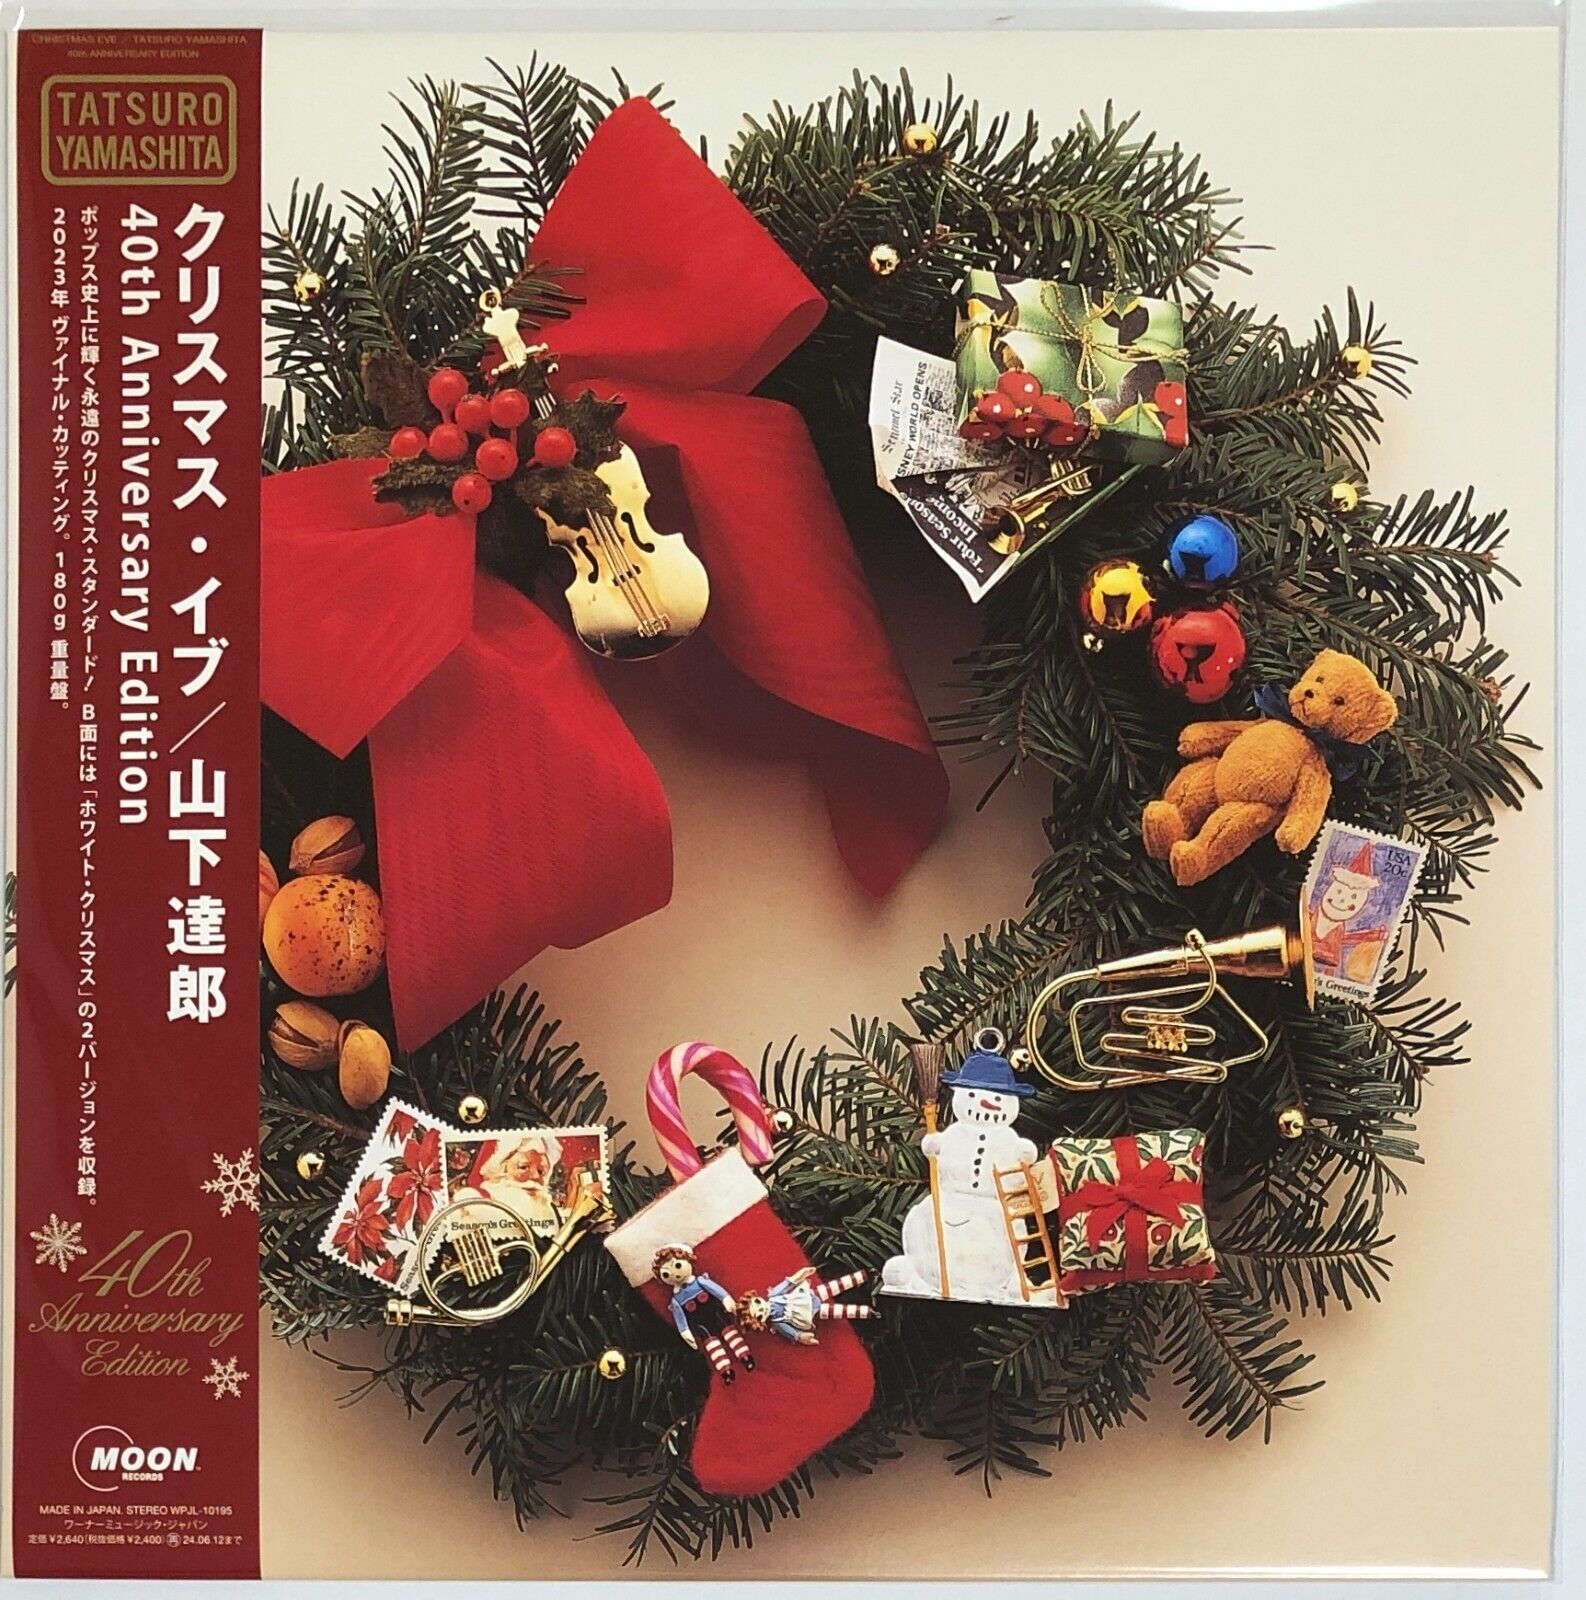 Tatsuro Yamashita / Christmas Eve 40th Anniversary Edition 1992 Vinyl LP Japan